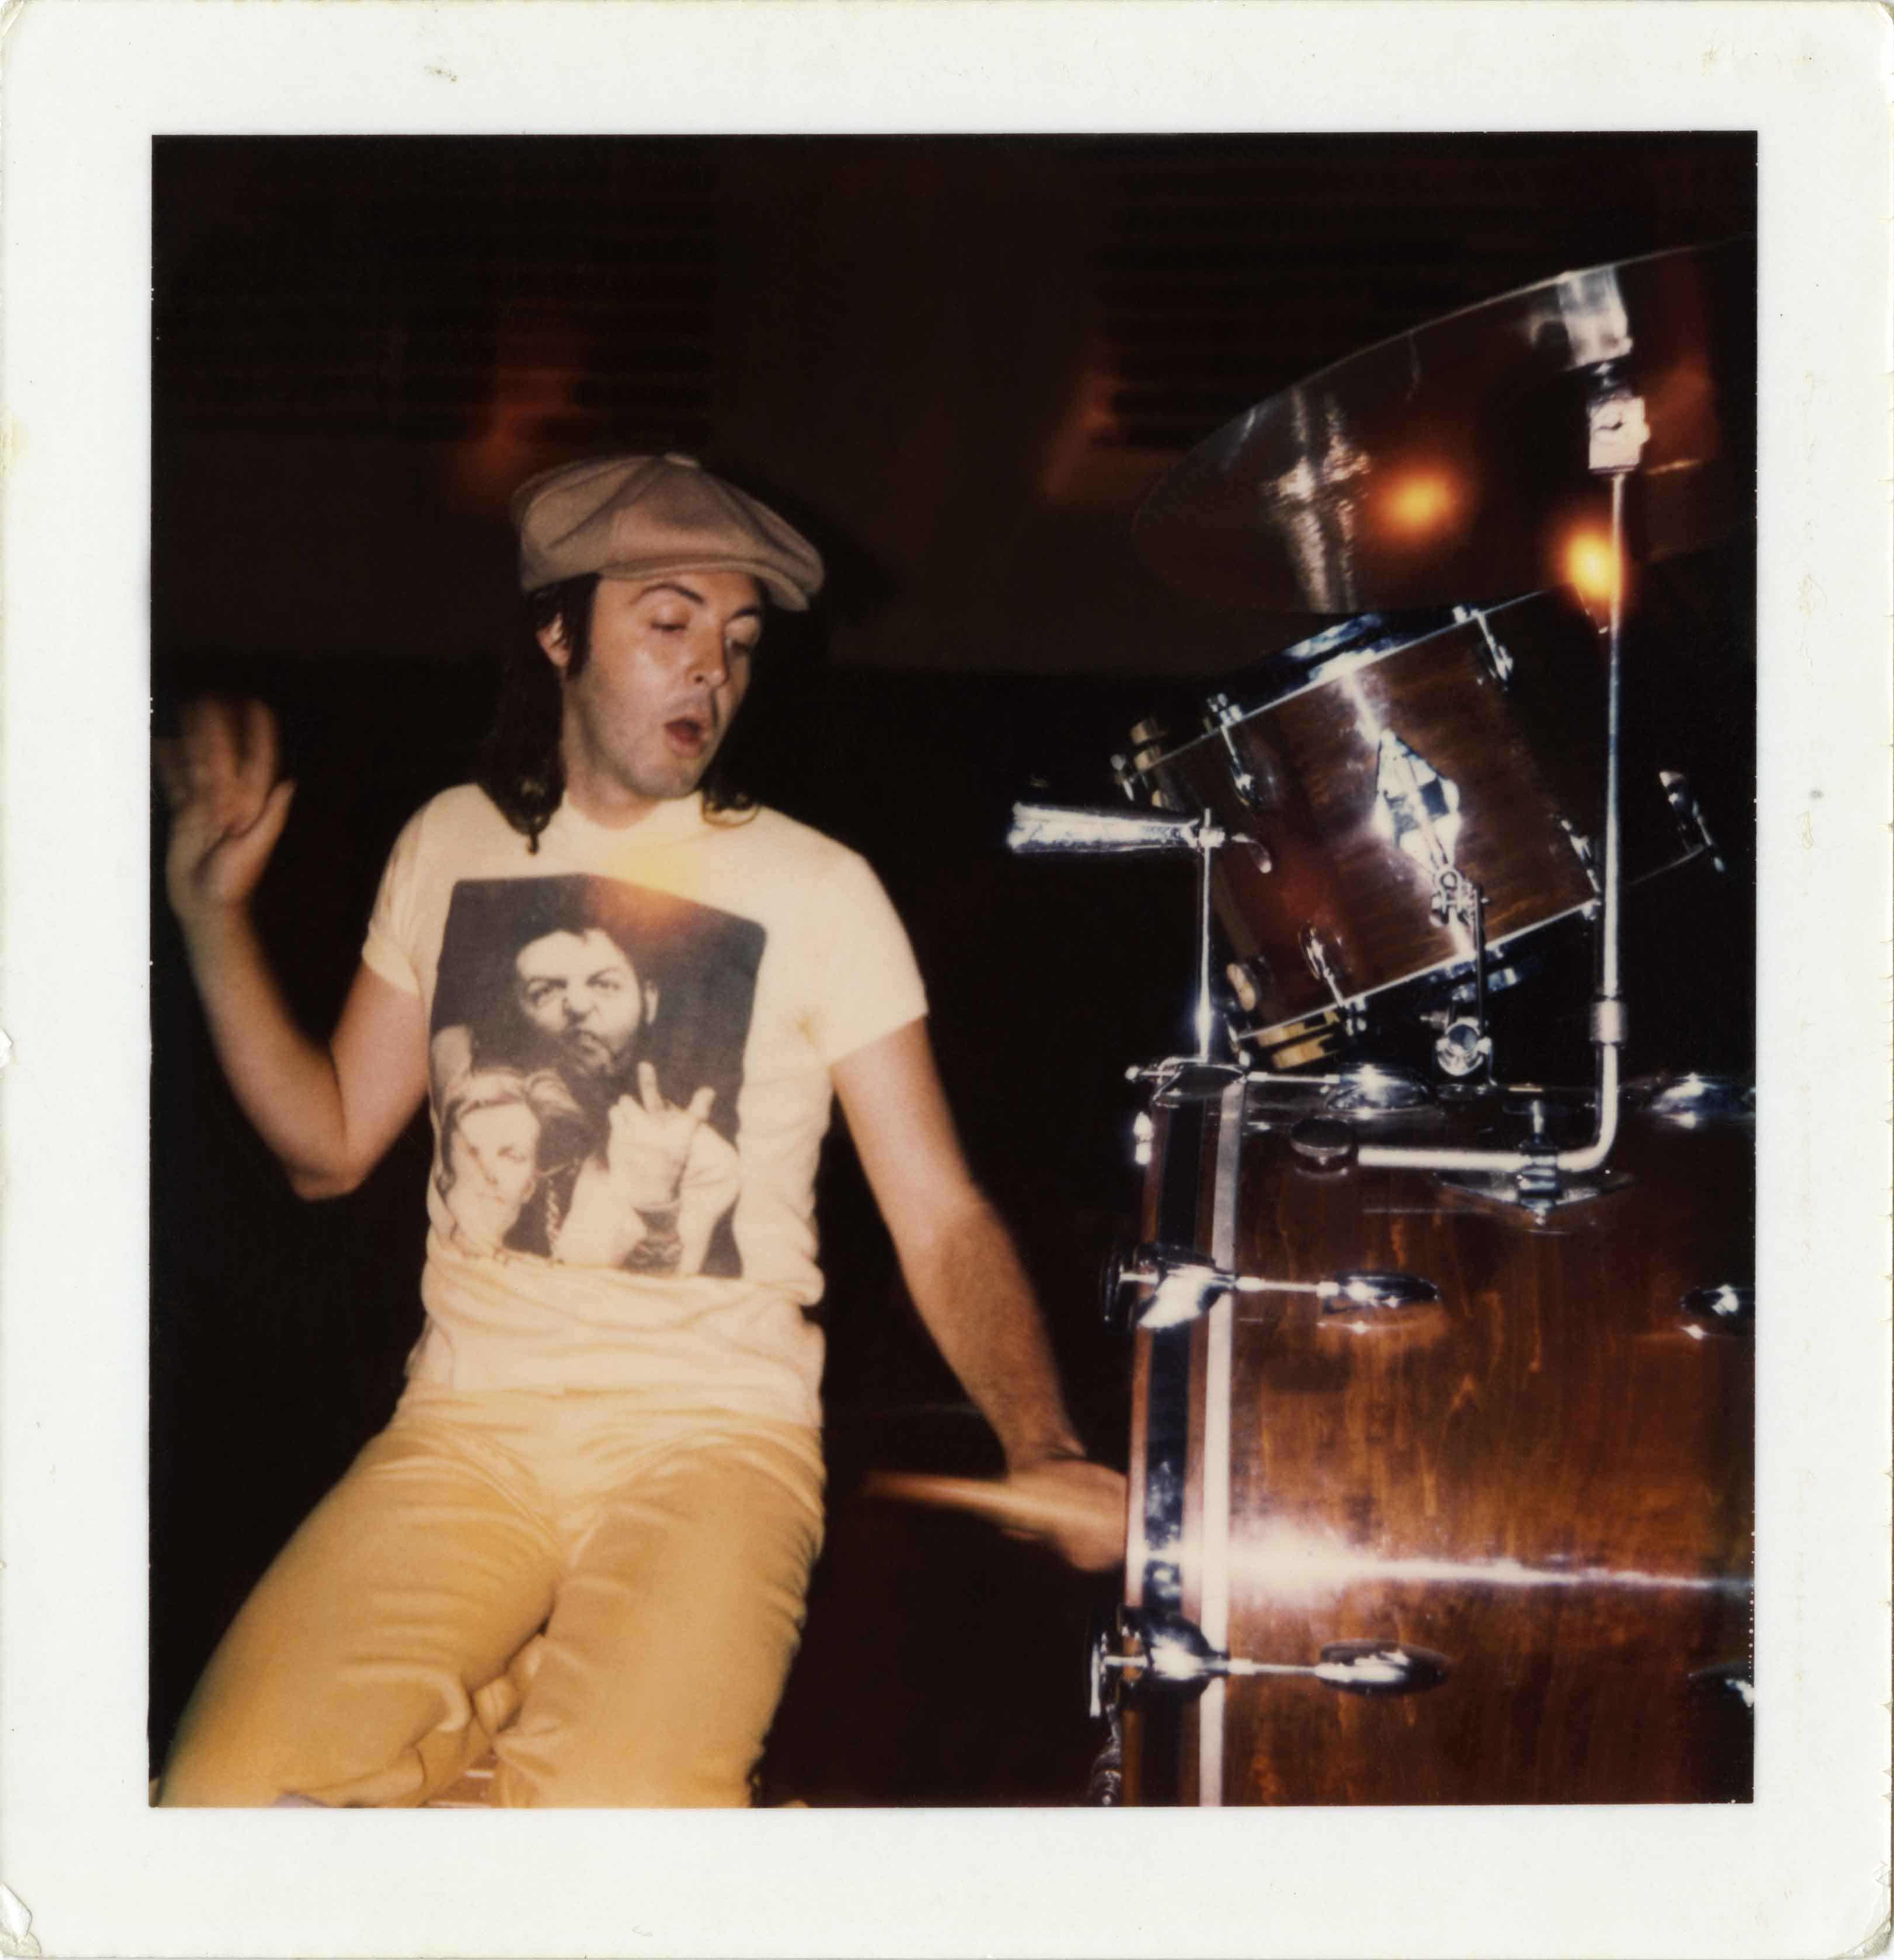 Paul posing next to a drum kit